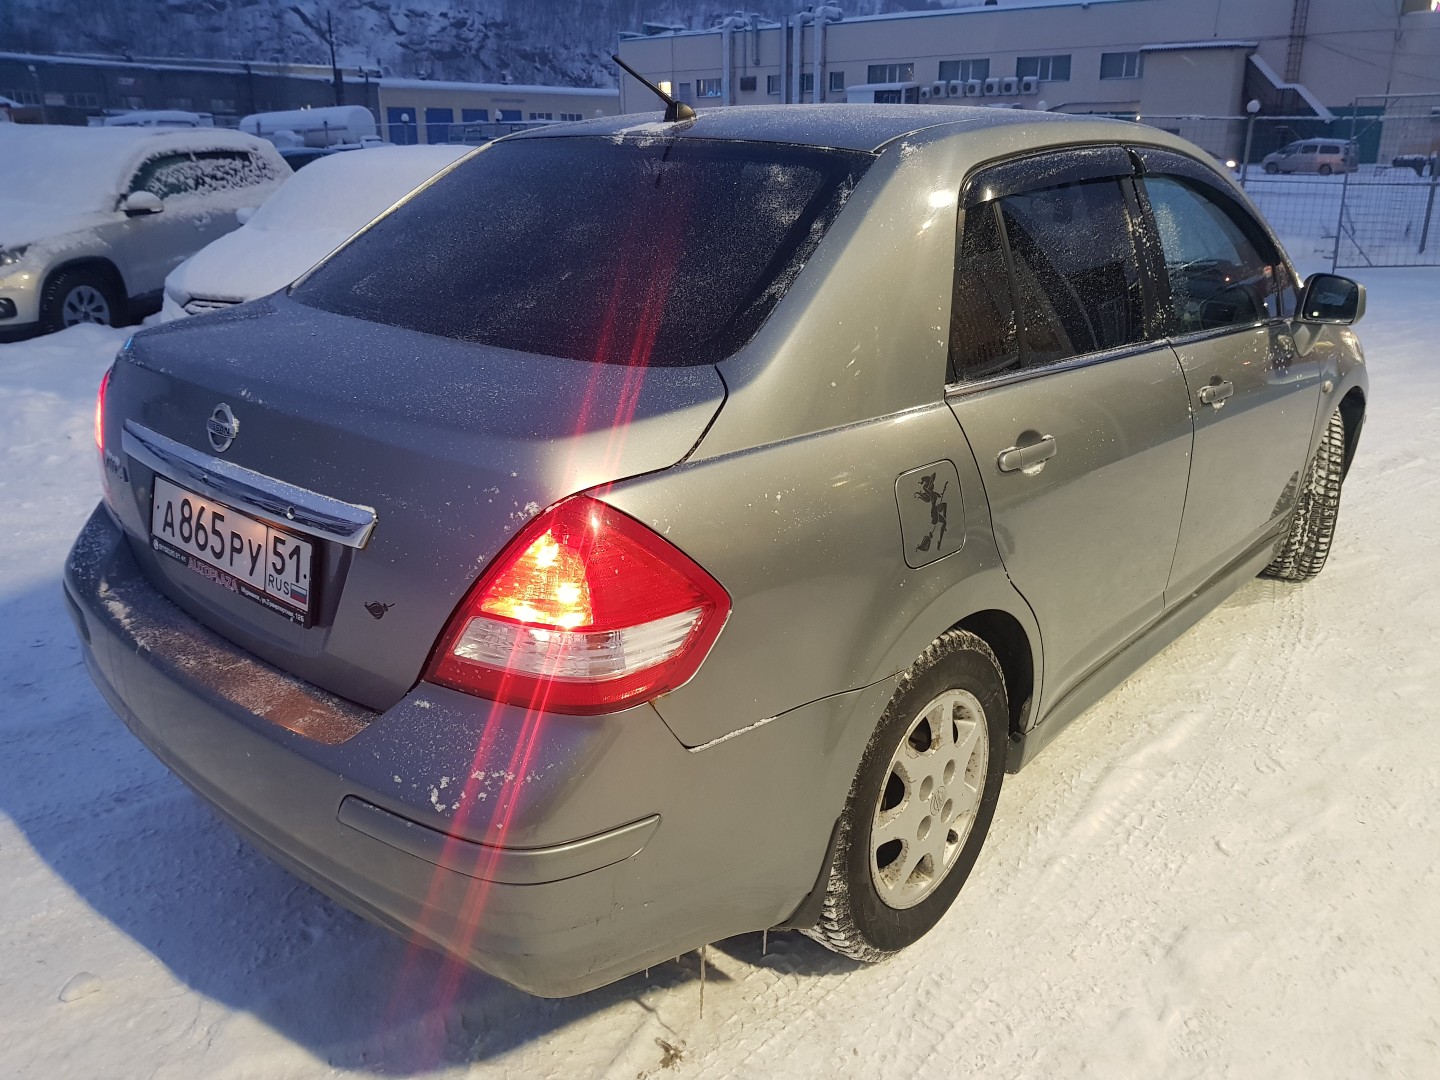 Nissan Tiida, 2011 г.в., пробег 114 700 км, цена, фото, Мурманск